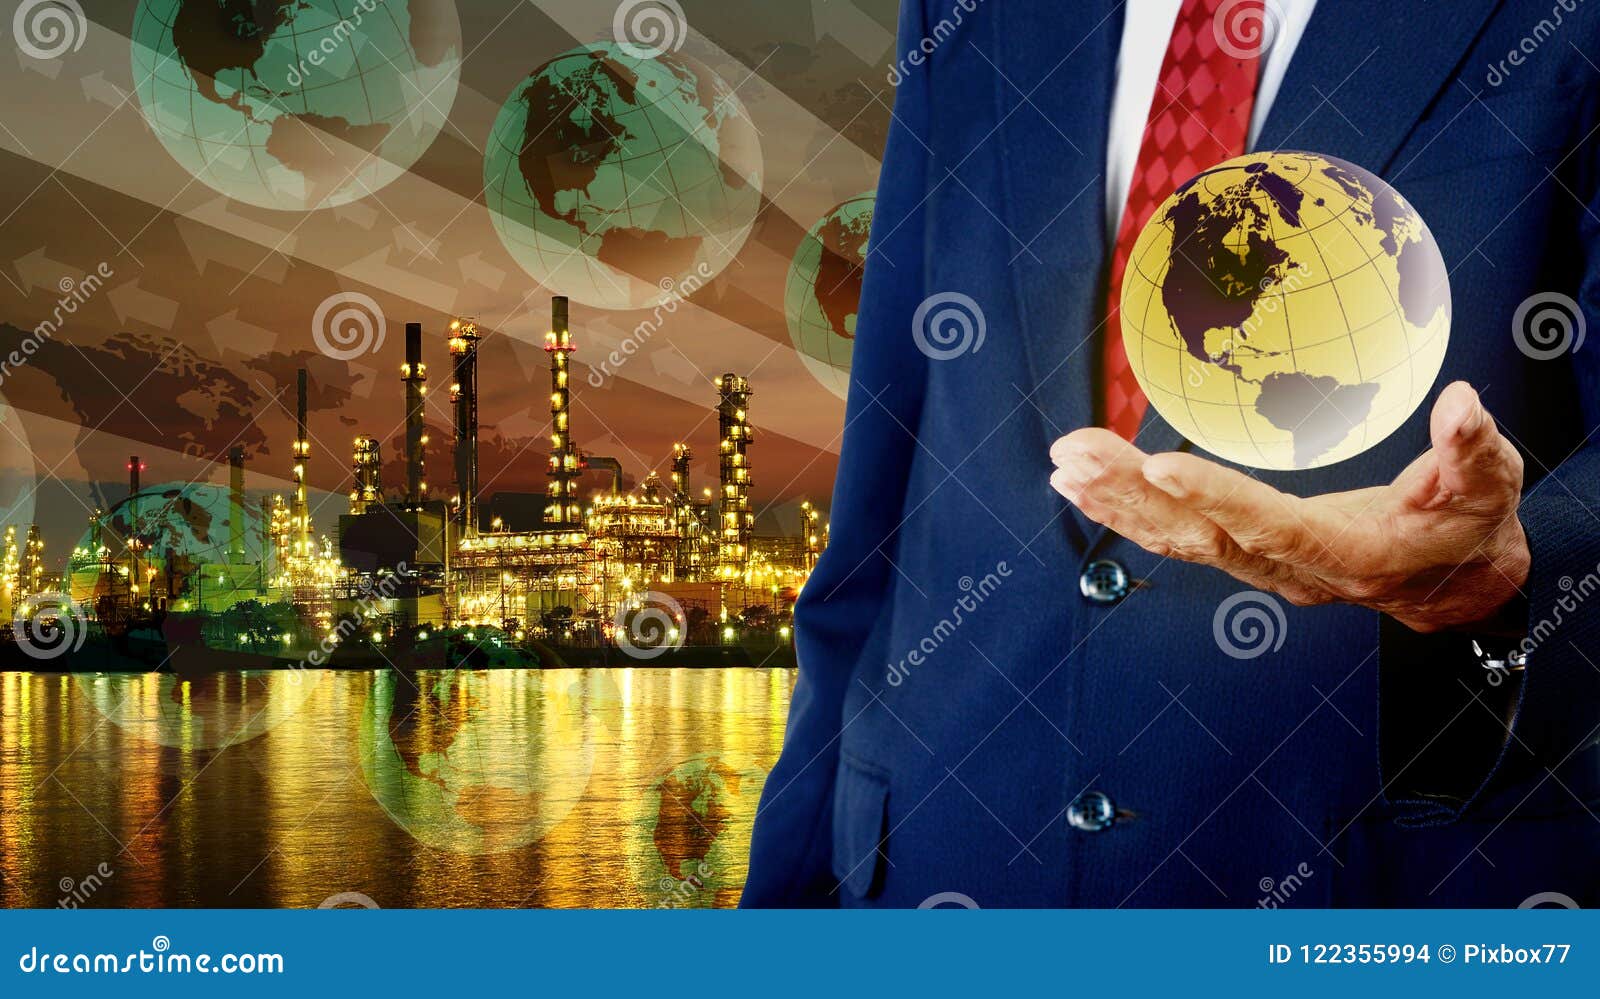 oil refinery buisness, save energy